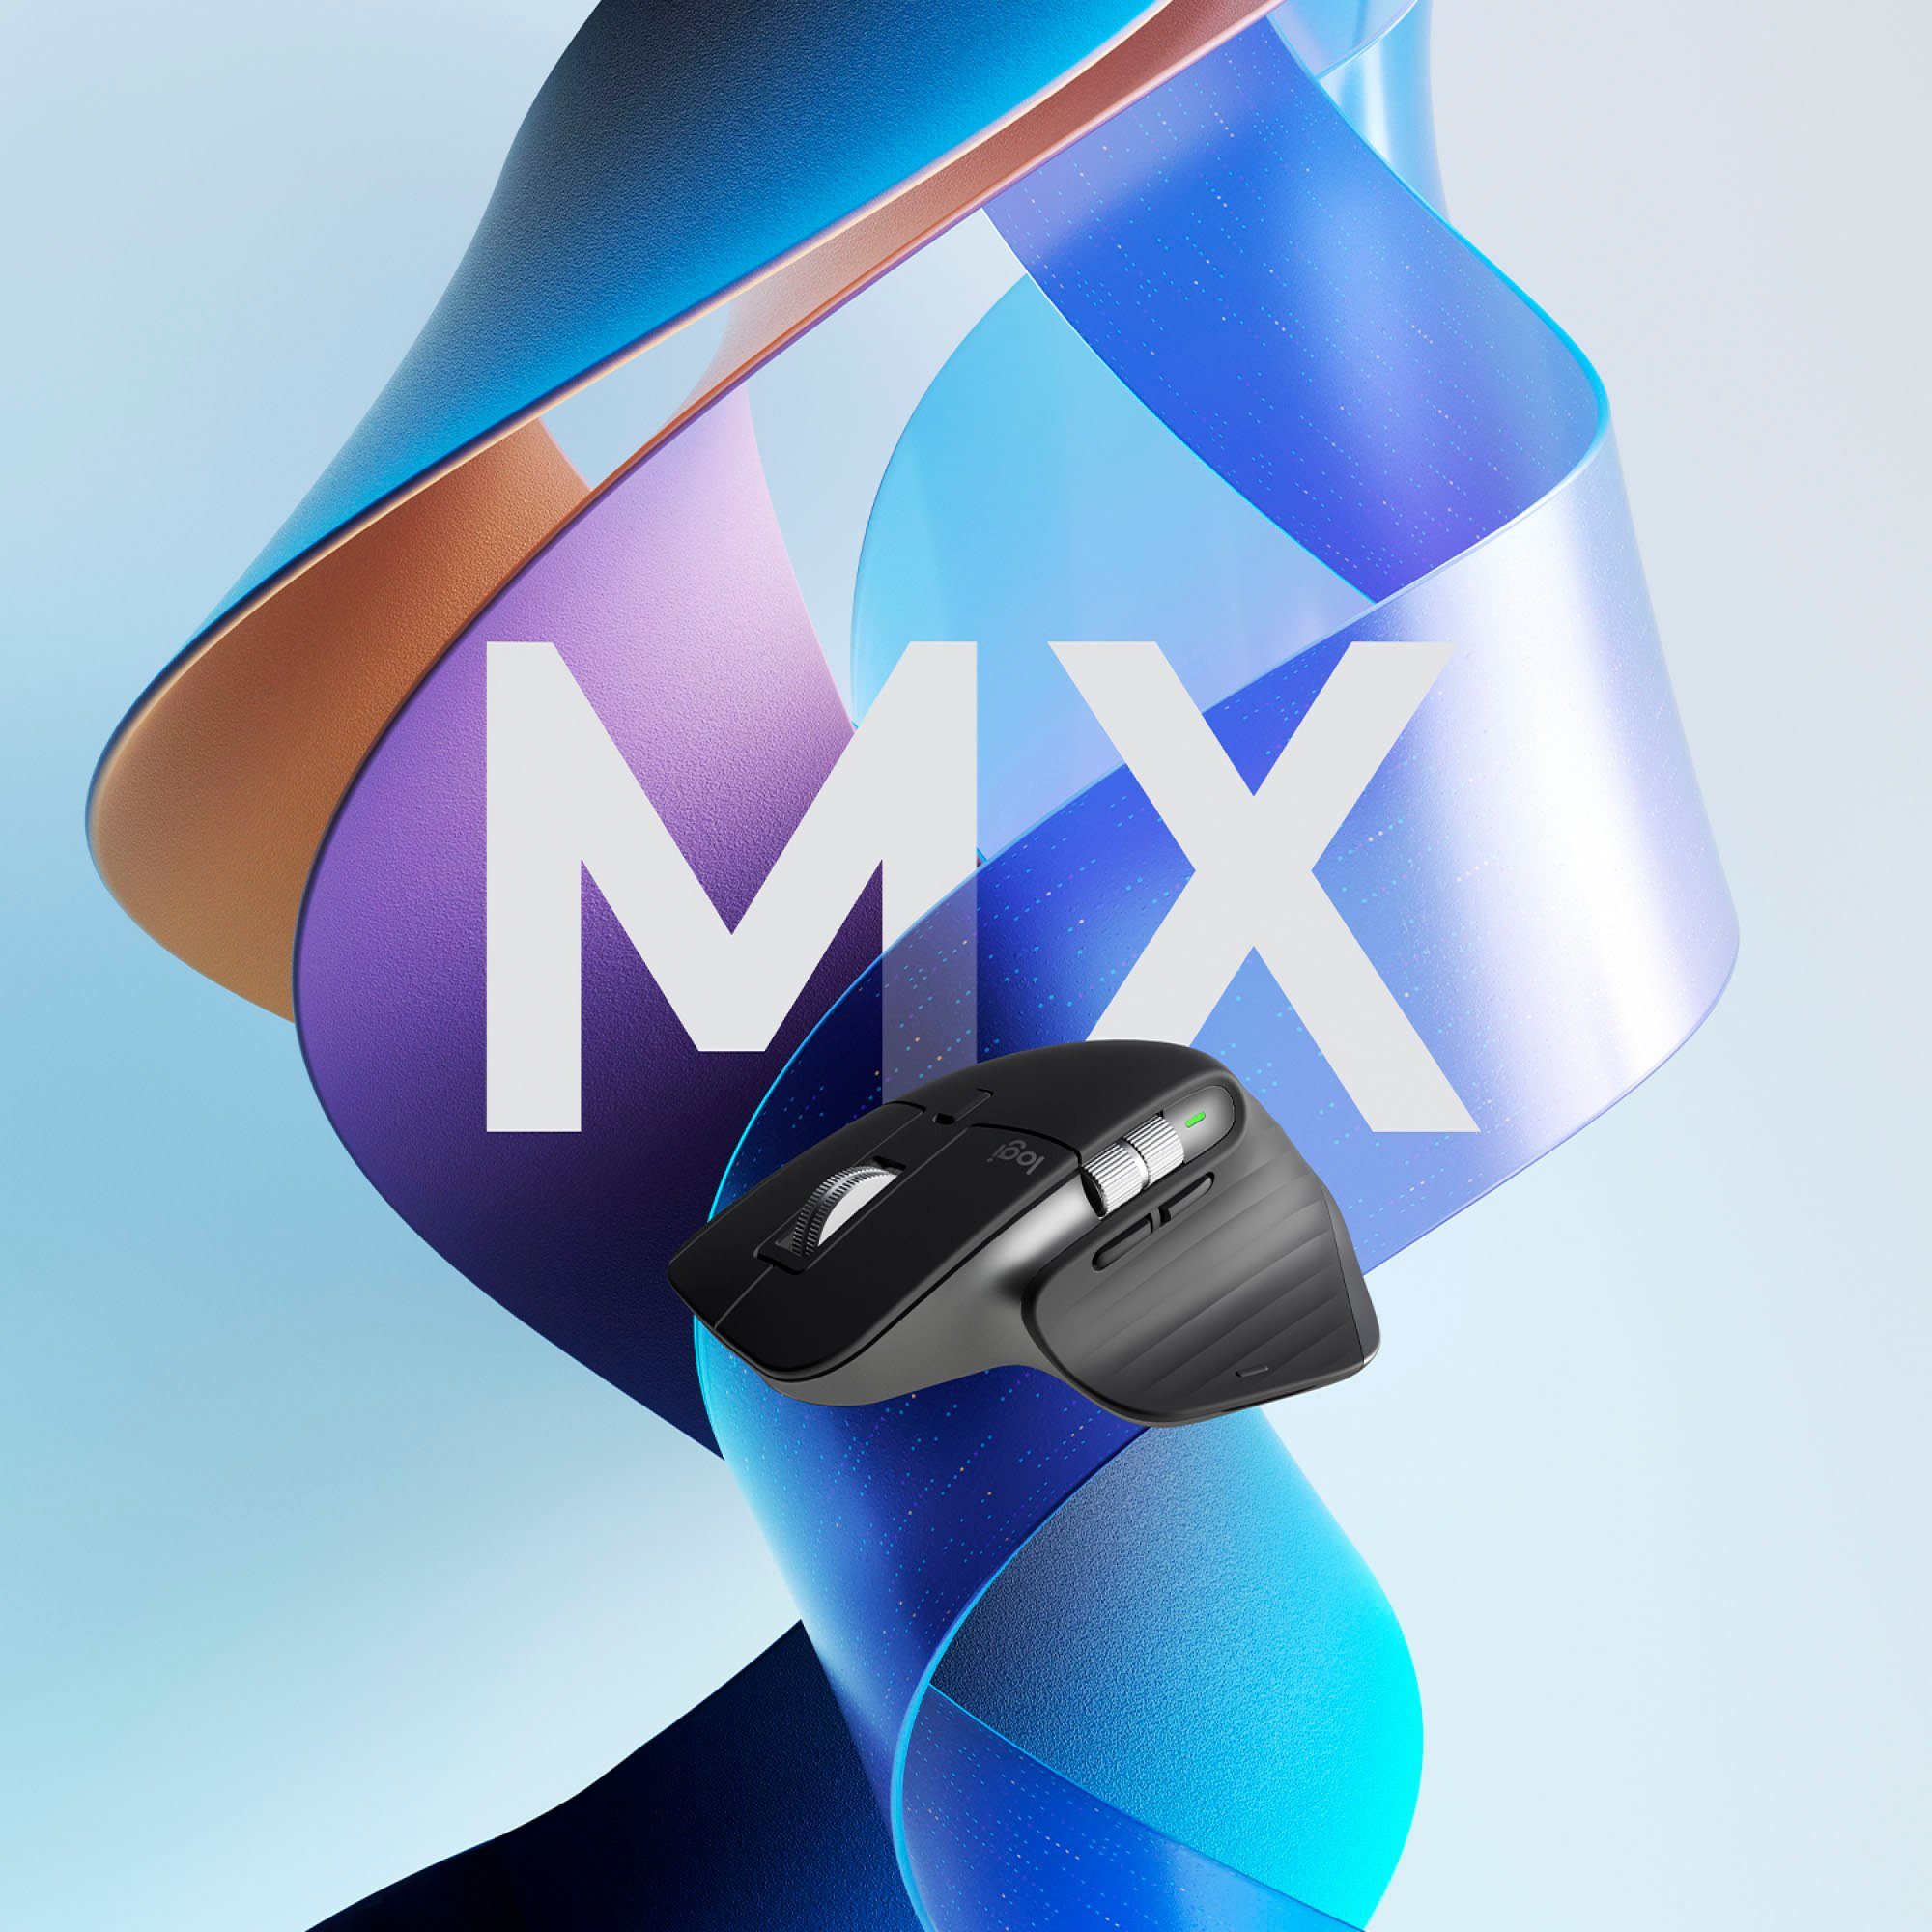 Maus Grau Master MX Logitech 3S (Bluetooth)